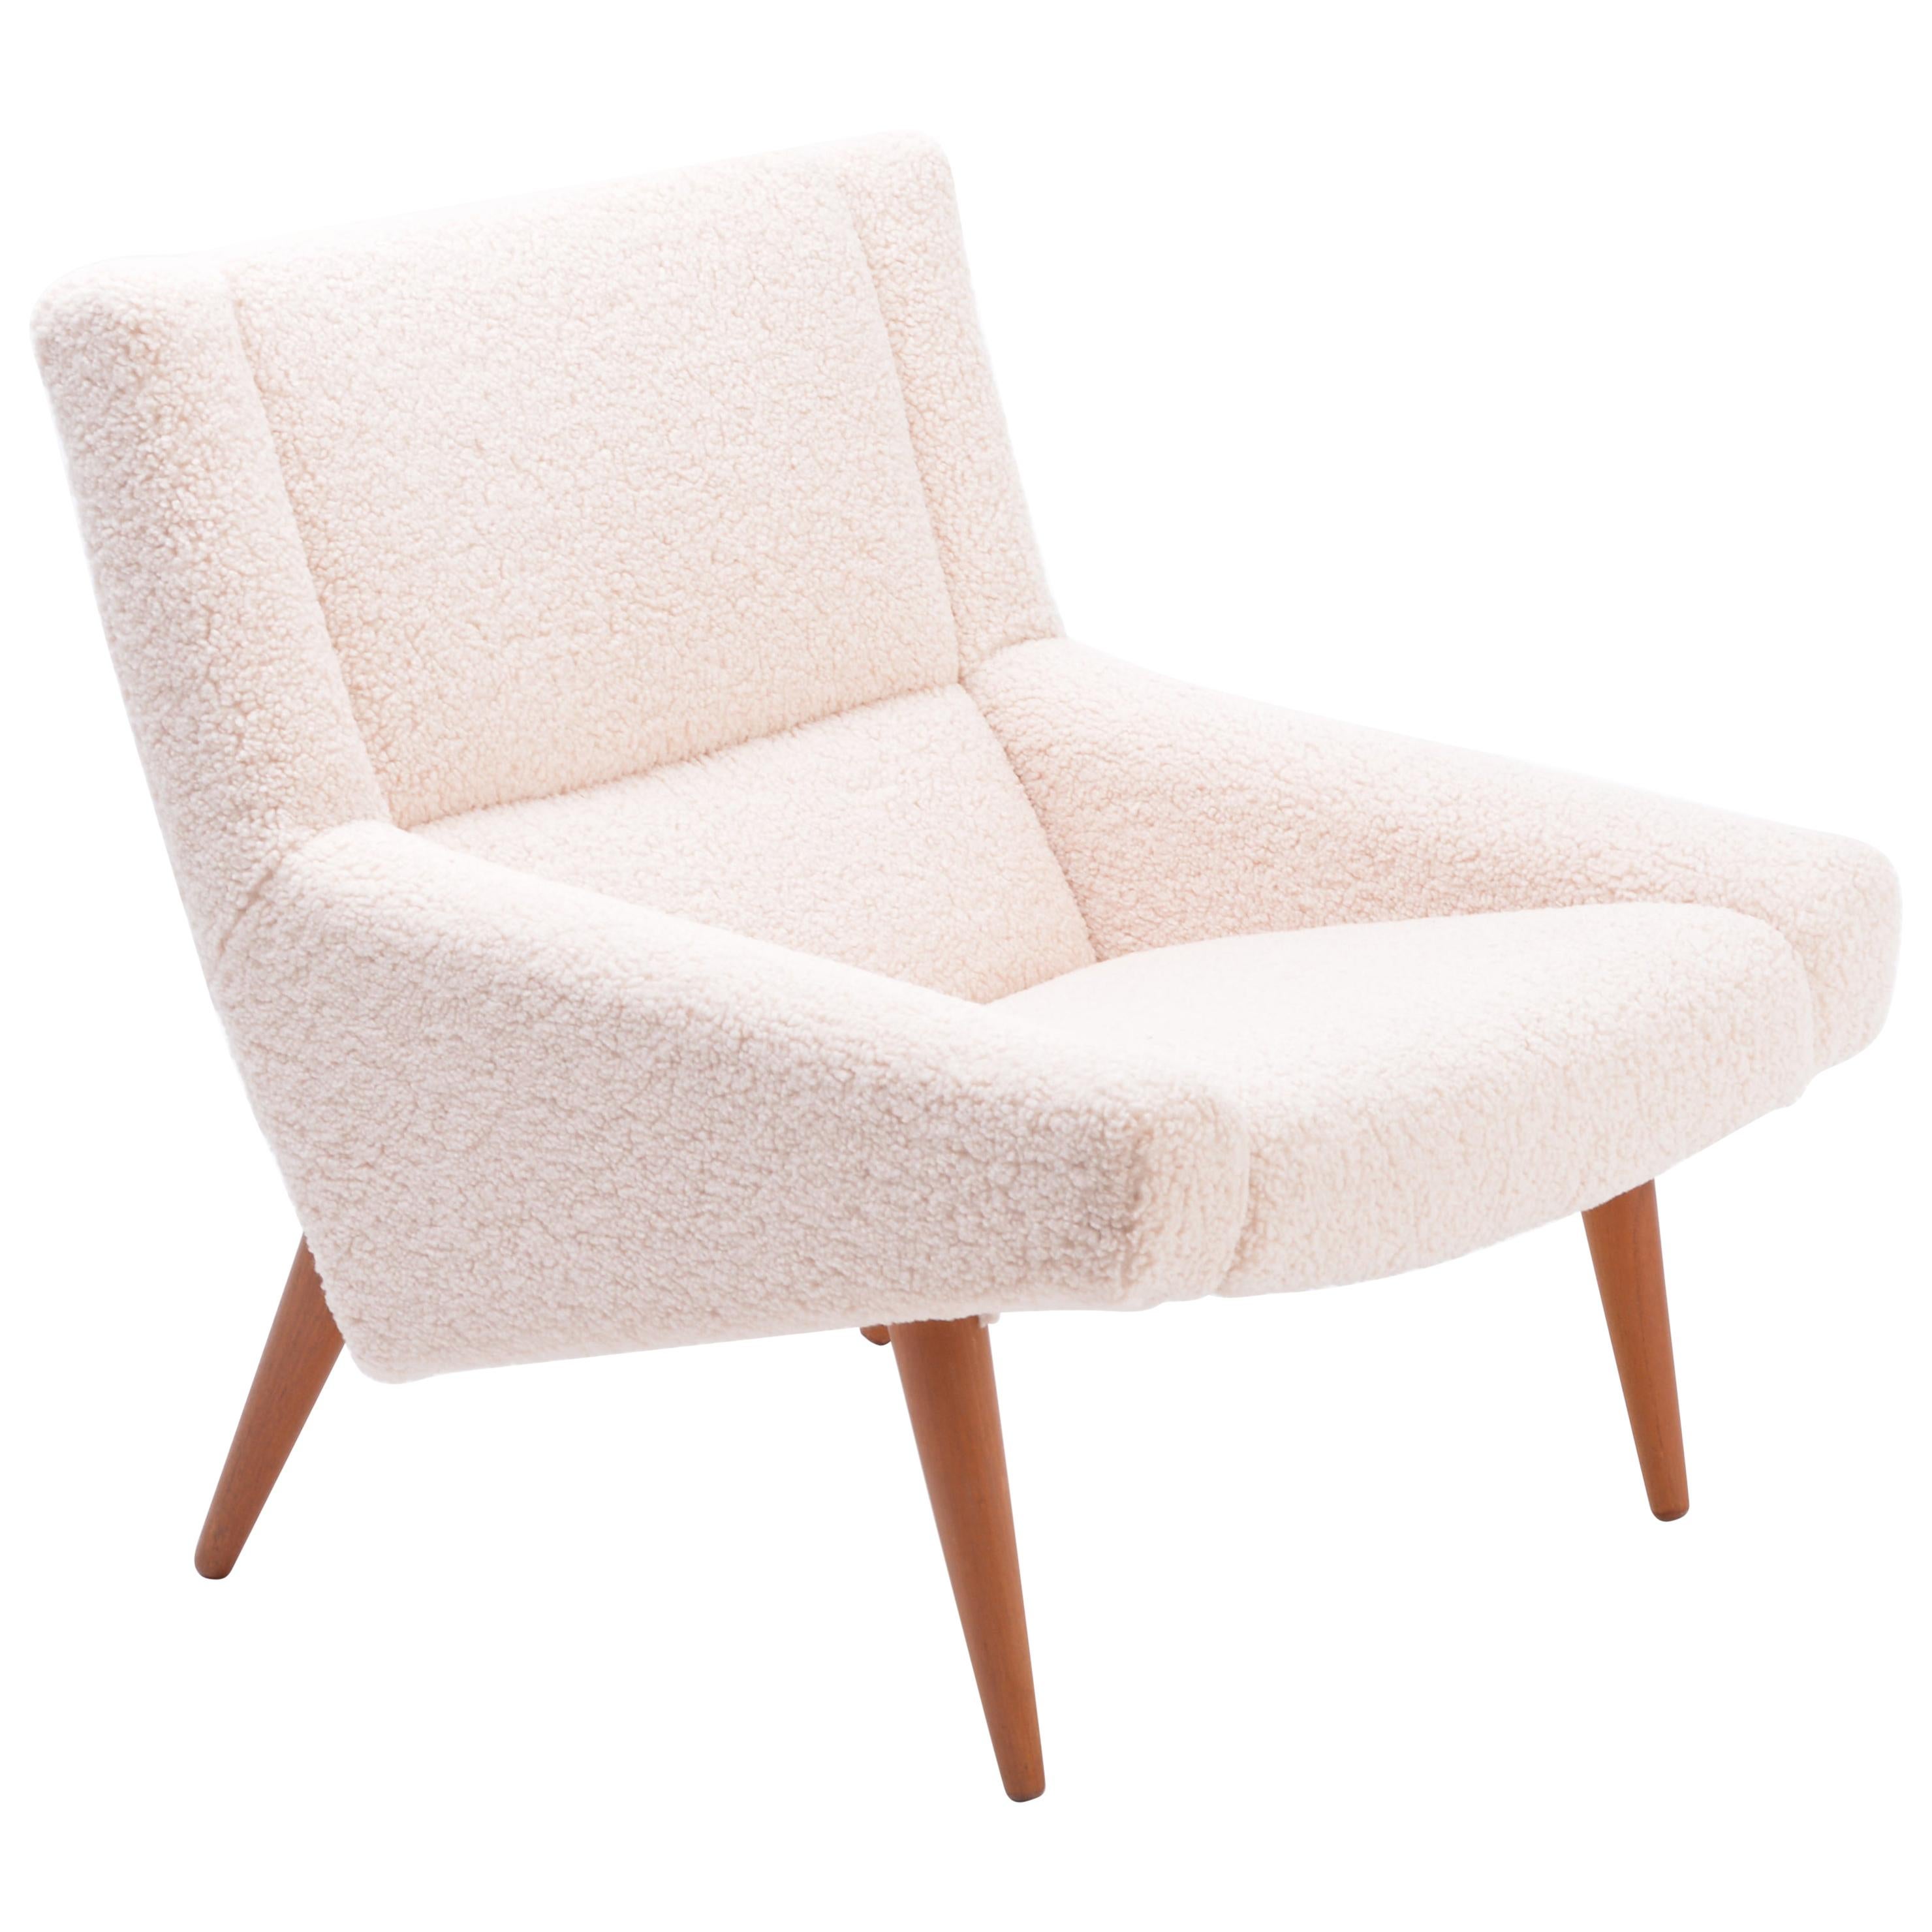 Danish Mid-Century Modern Model 50 Chair by Illum Wikkelsø in Teddy Fur